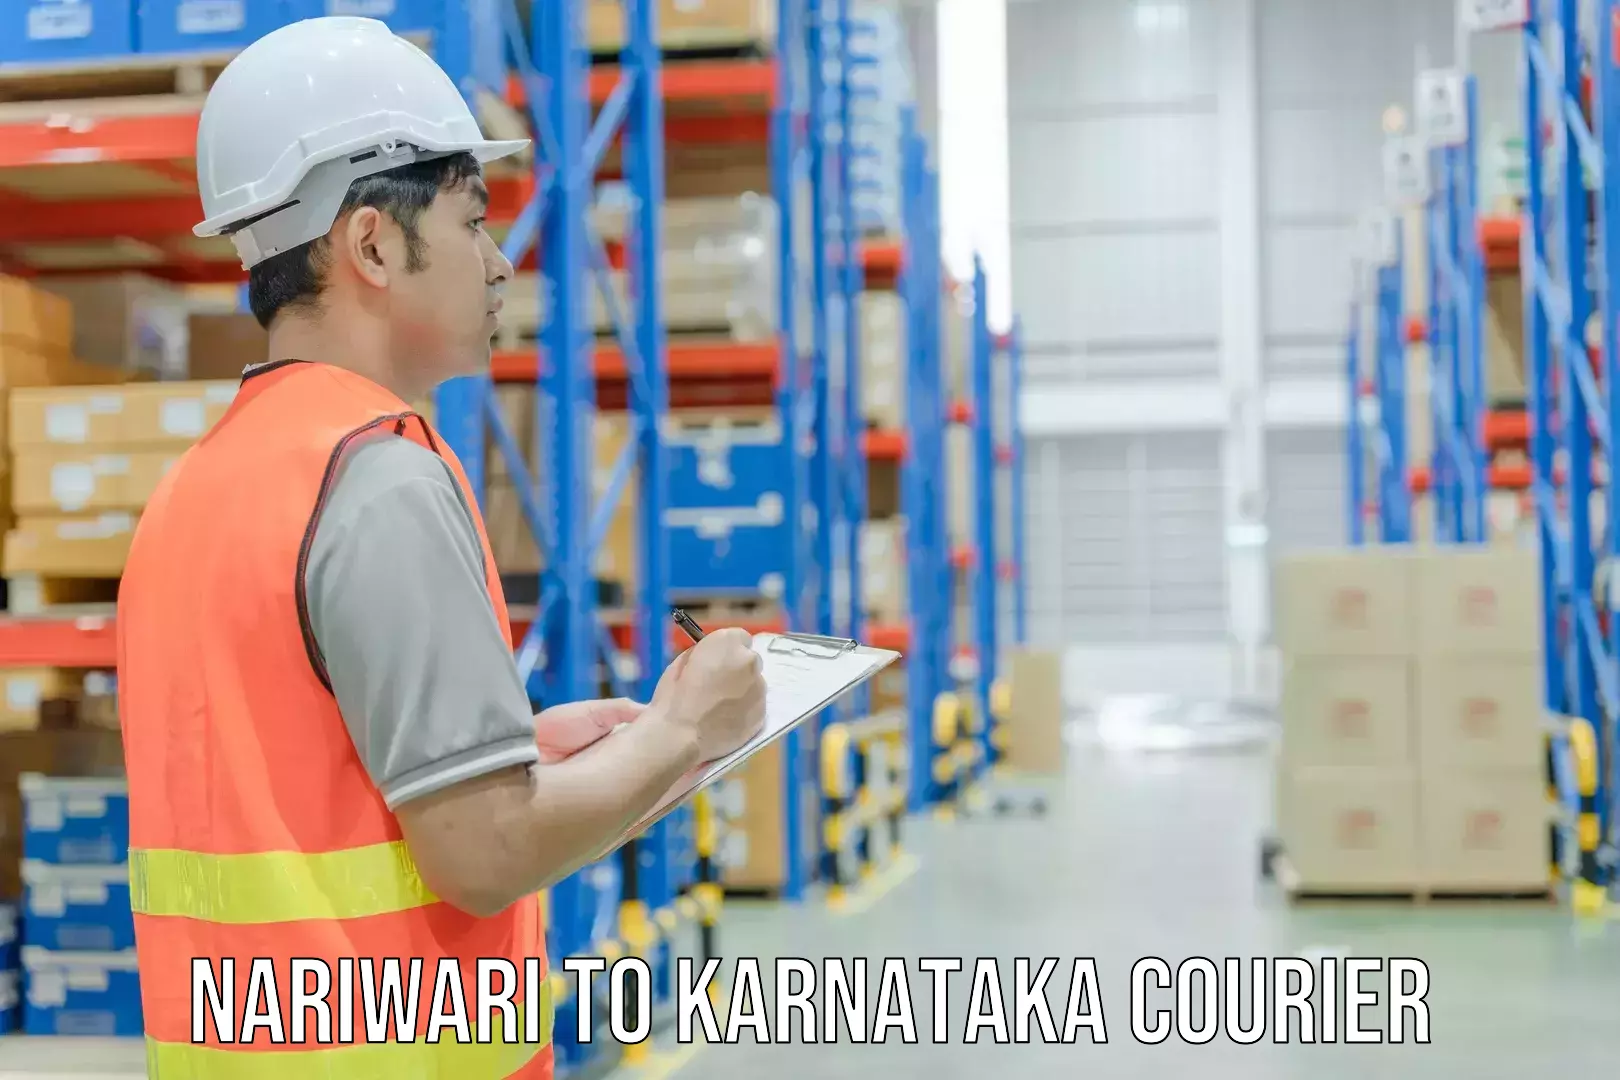 Speedy delivery service Nariwari to Karnataka